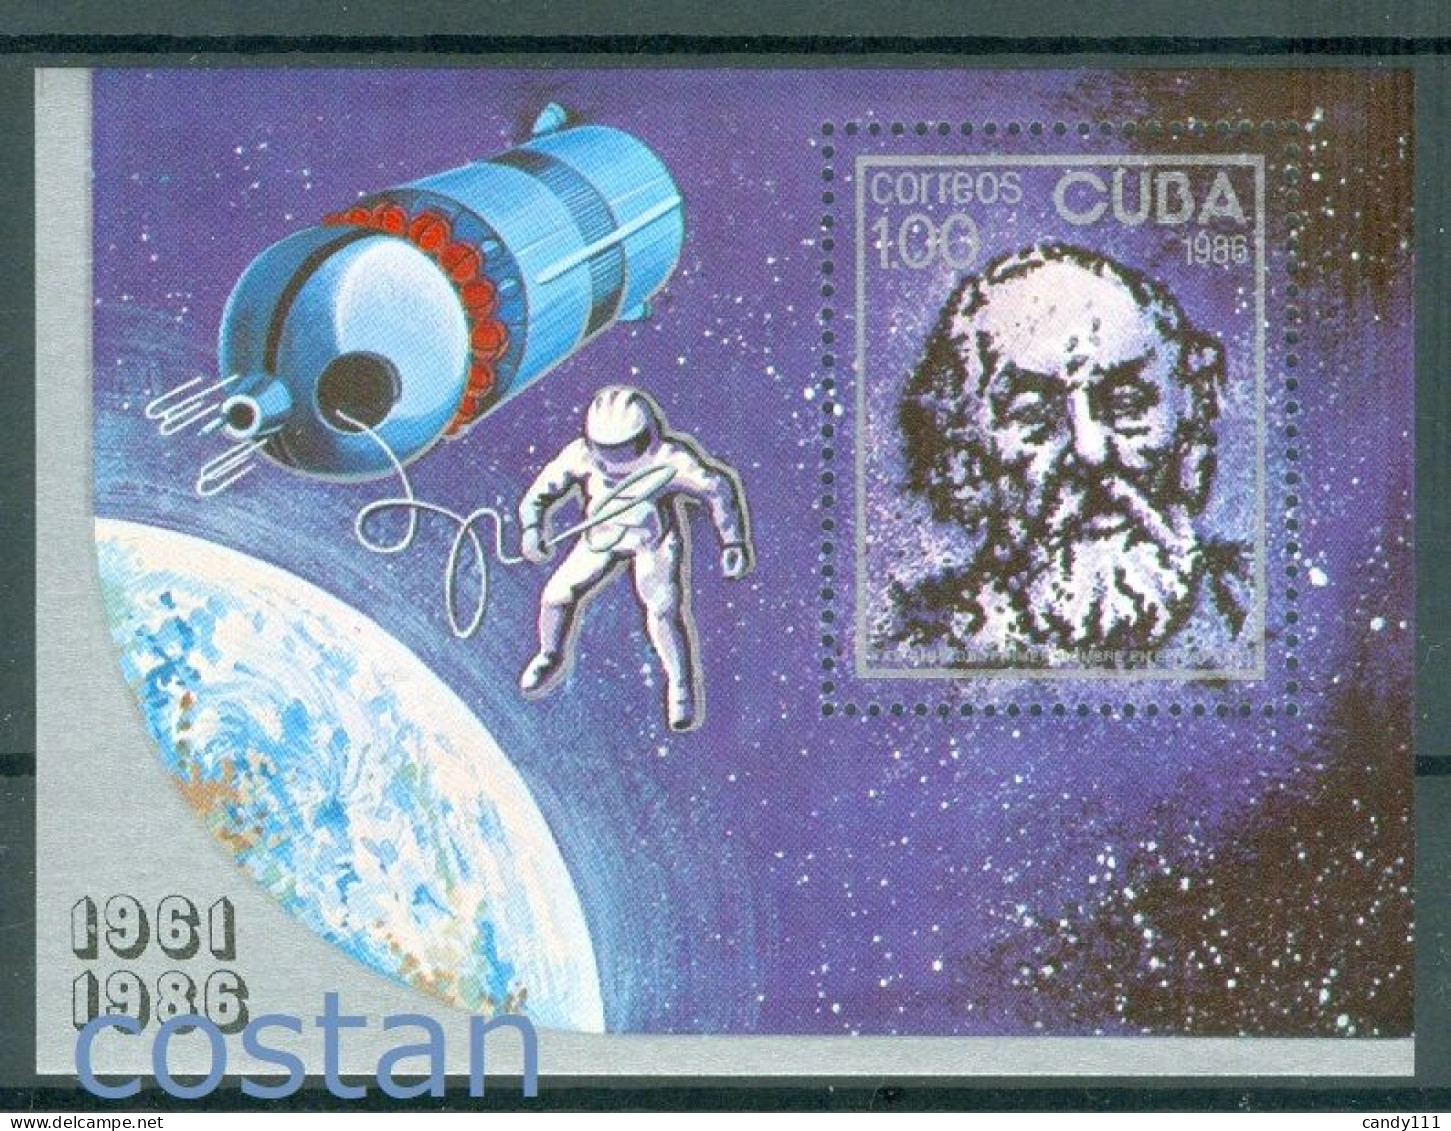 1986 Space,Konstantin Tsiolkovsky,russian Rocket Scientist,Cuba,Bl.94,MNH - Südamerika